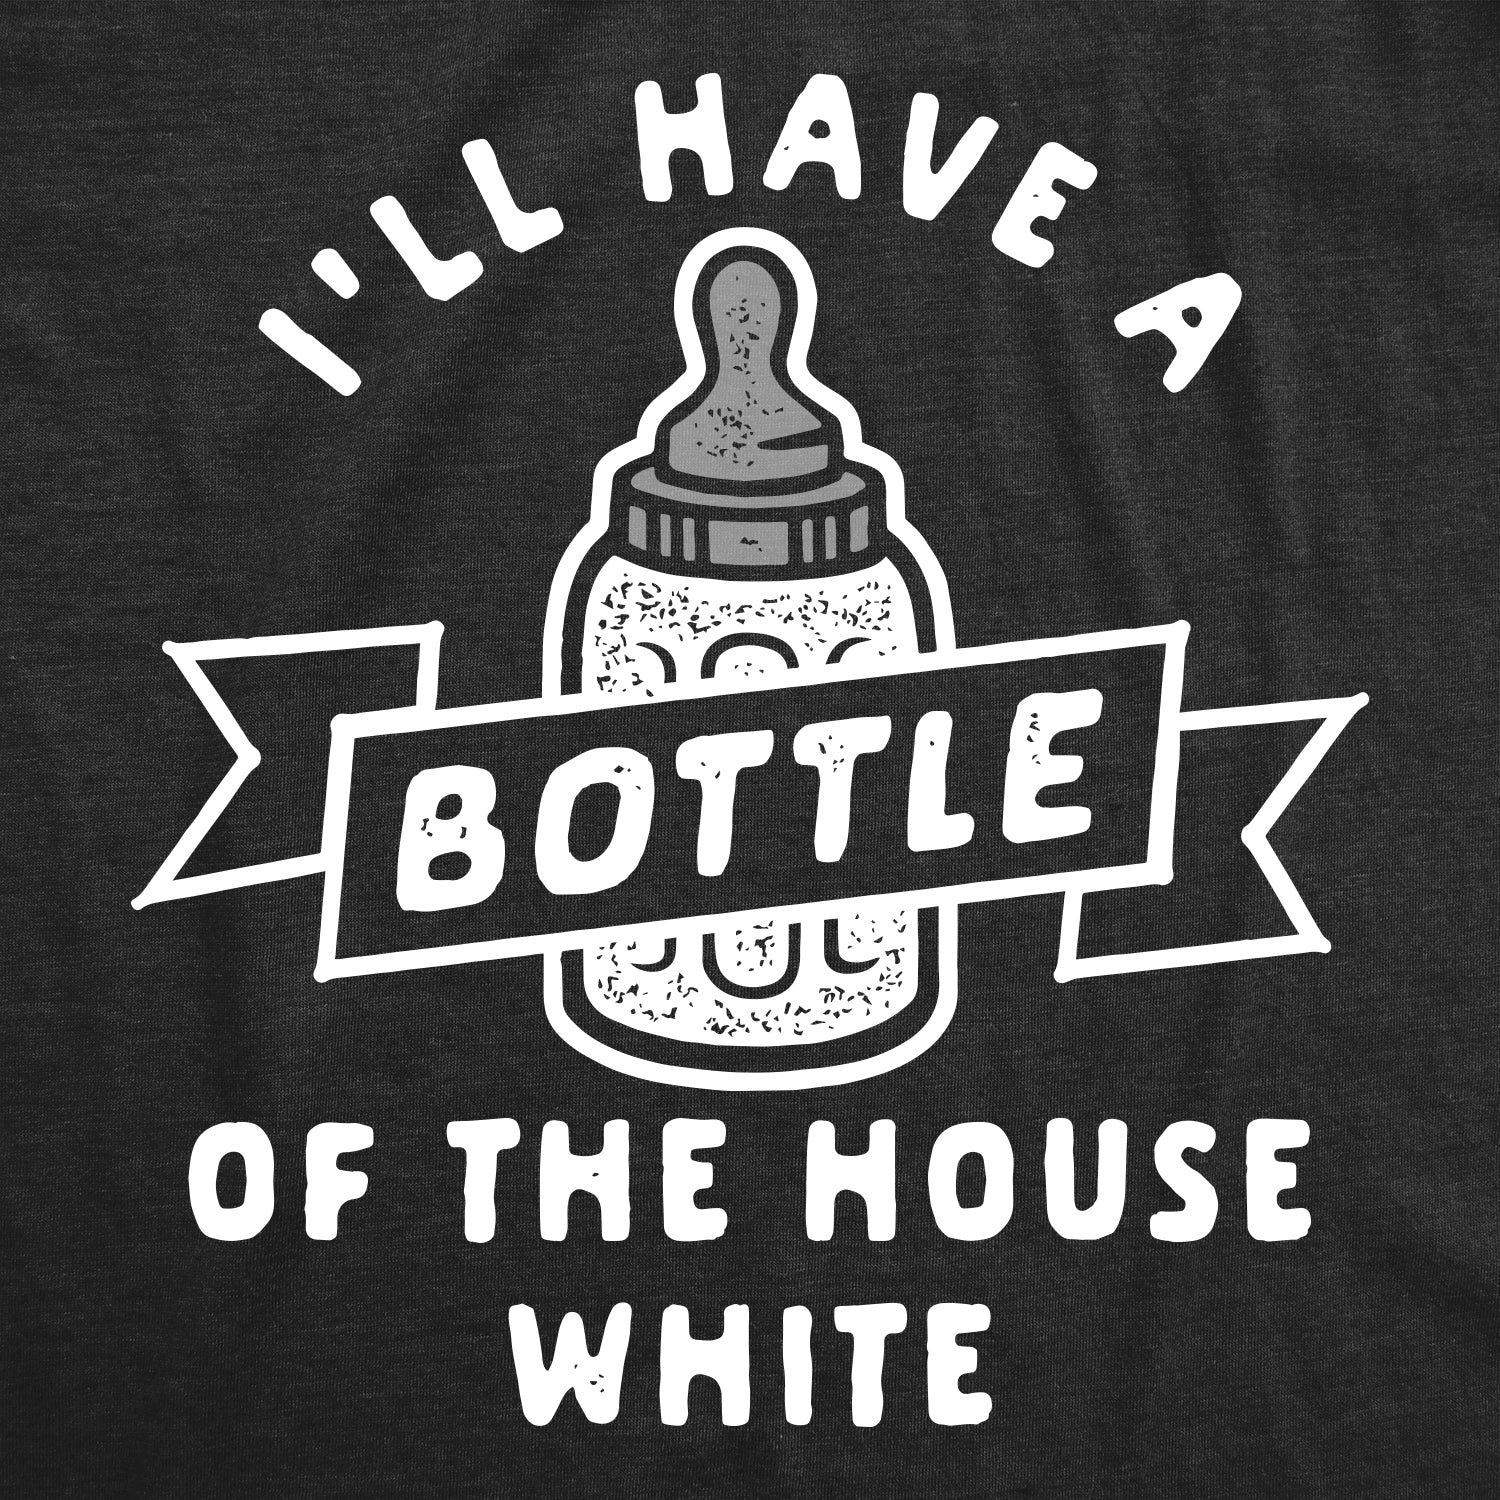 Funny Heather Black Bottle Of The House White Onesie Nerdy Wine Tee